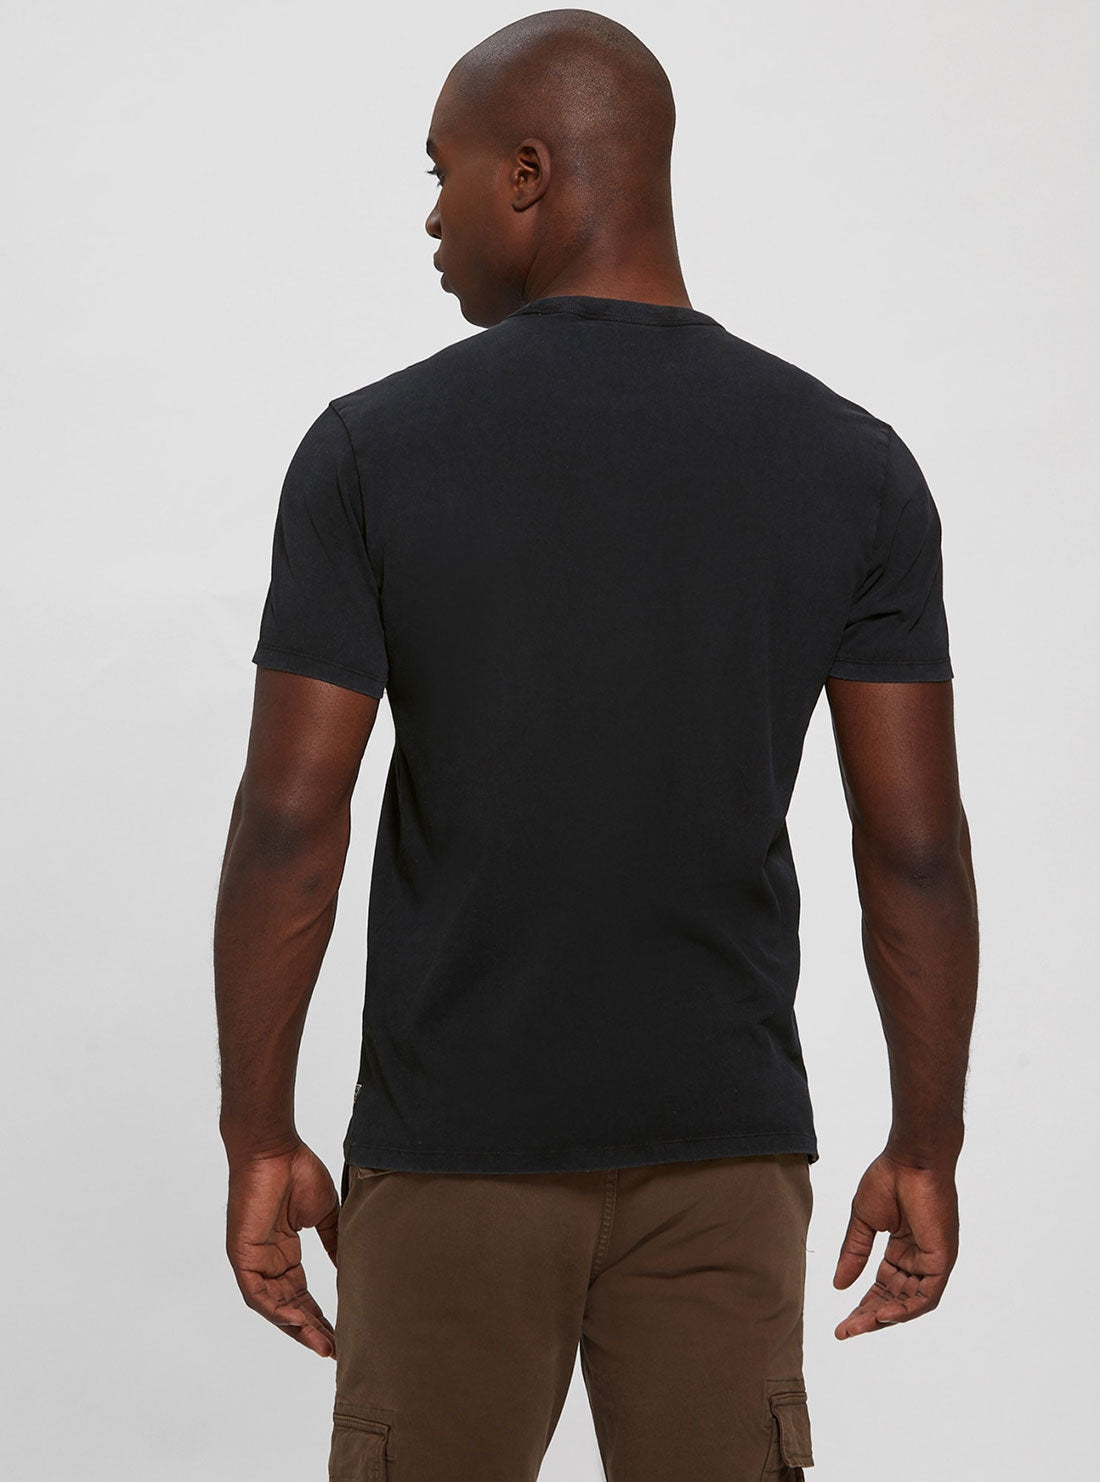 GUESS Men's Black Allure Graphic T-Shirt M2BI82KA260 Back View